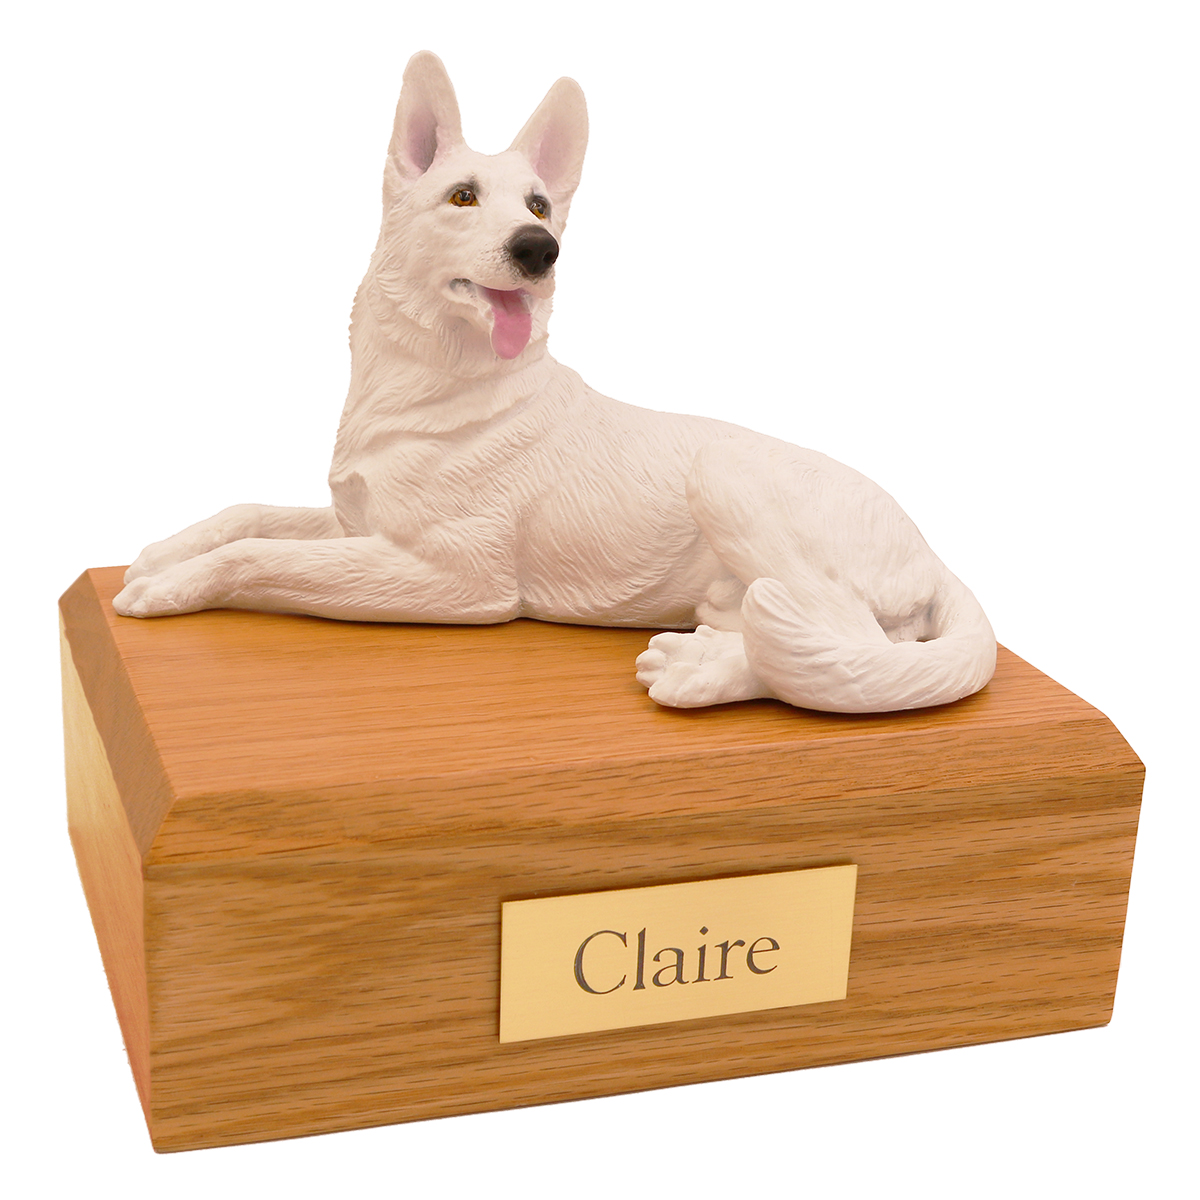 Dog, German Shepherd, White - Figurine Urn